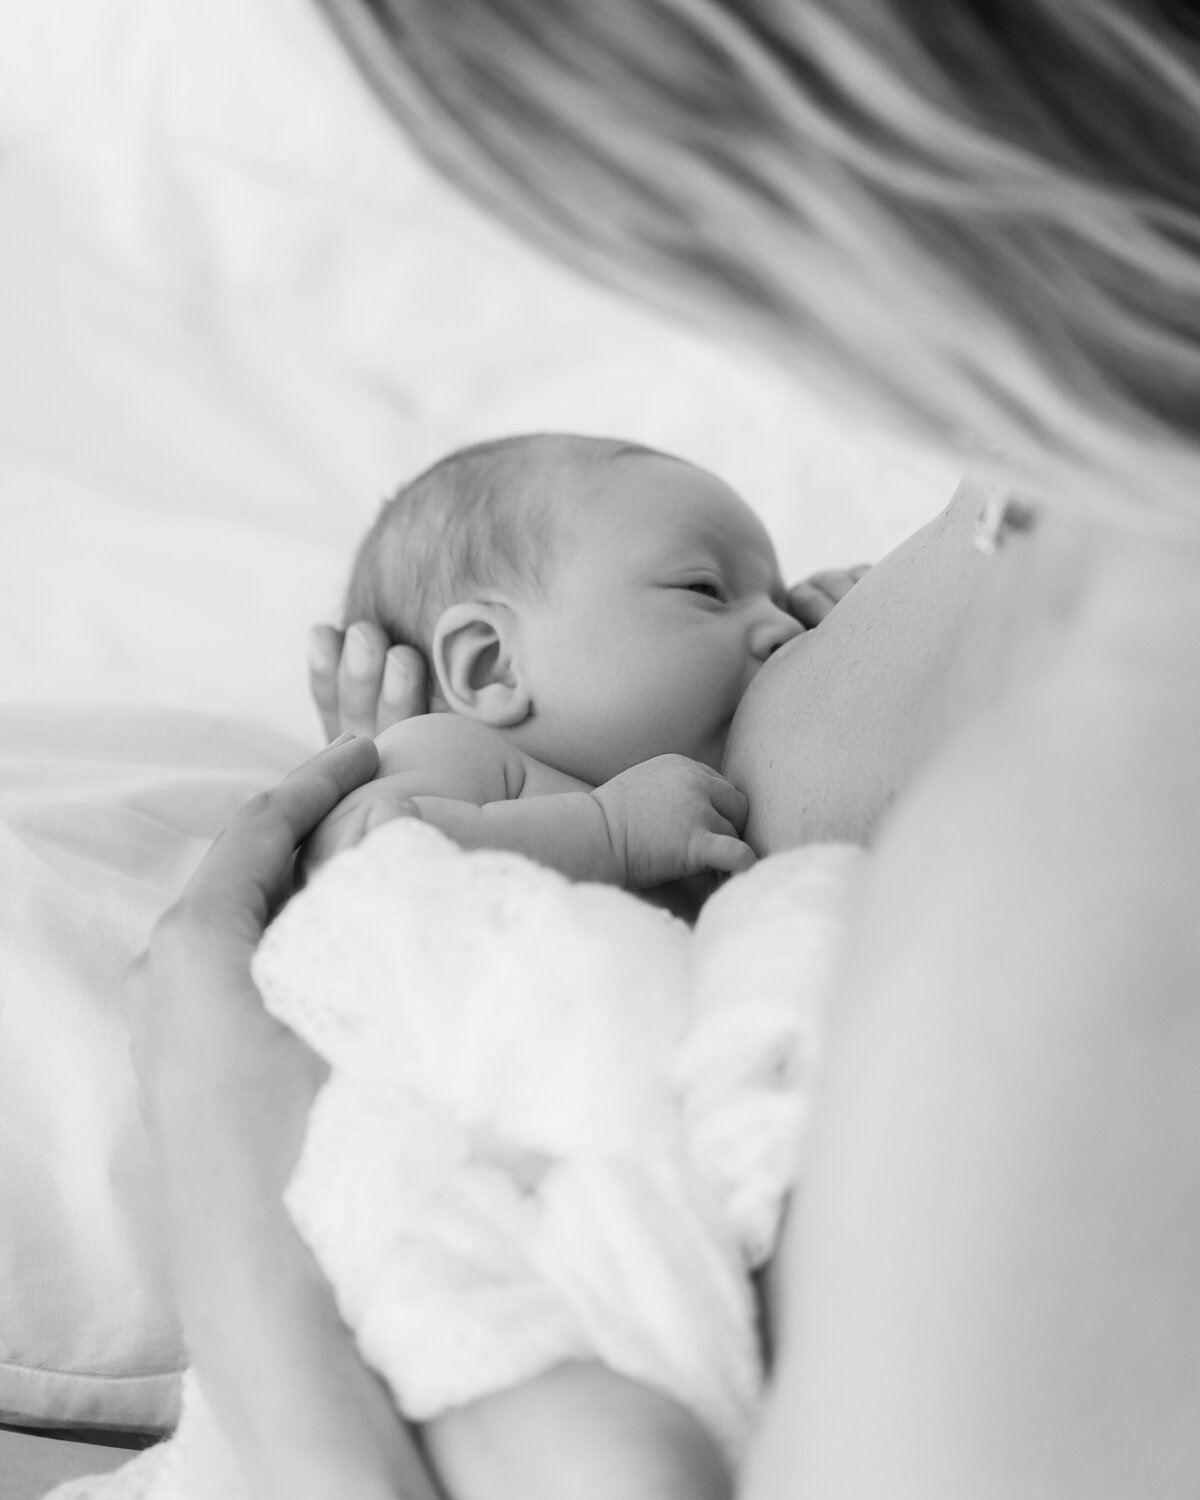 Lifestyle newborn photography by Daisy rey